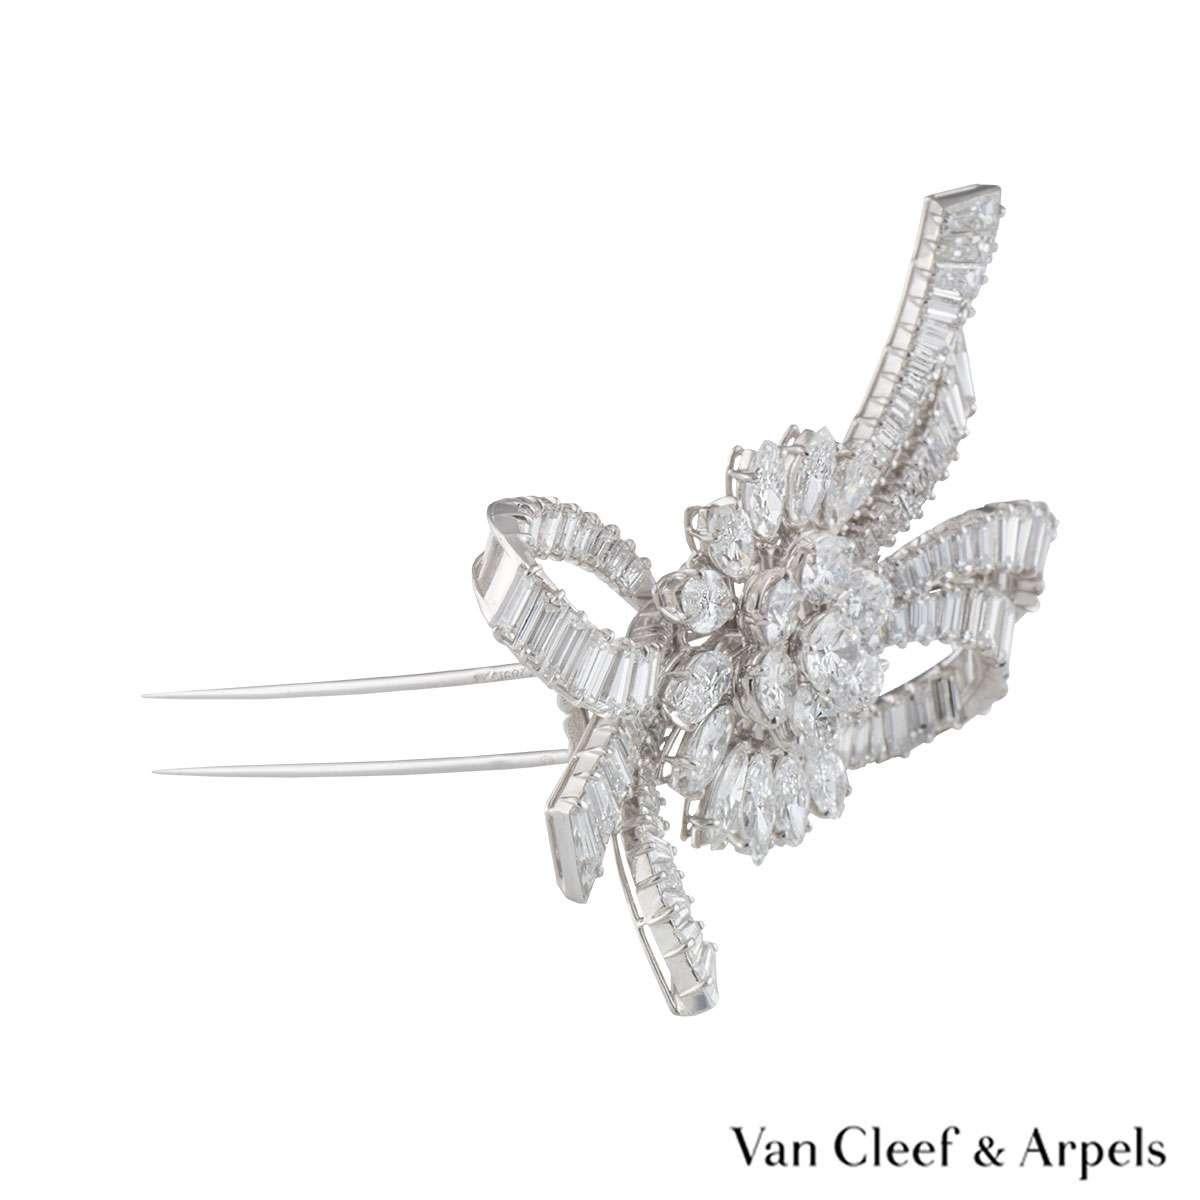 Van Cleef & Arpels Vintage 1950s Diamond Platinum Brooch 14 Carat In Excellent Condition For Sale In London, GB